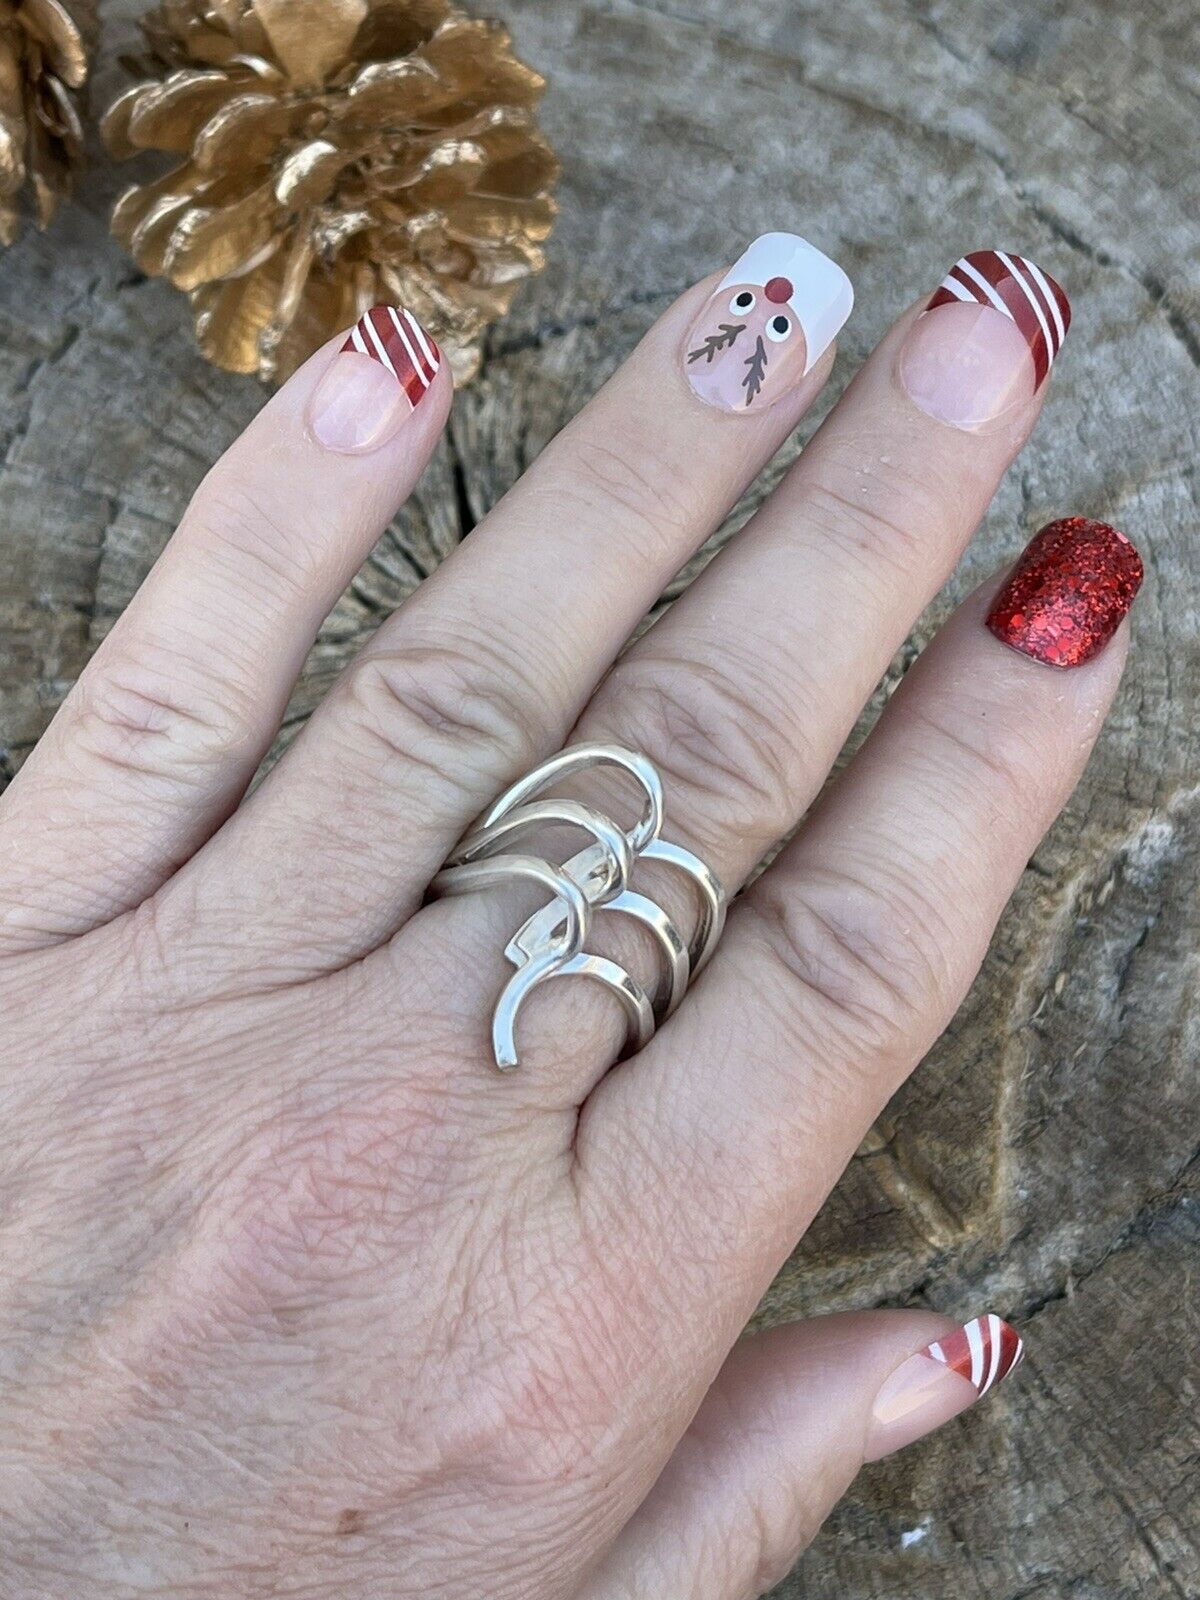 Beautiful Navajo Sterling Silver Swirls Wave Ring